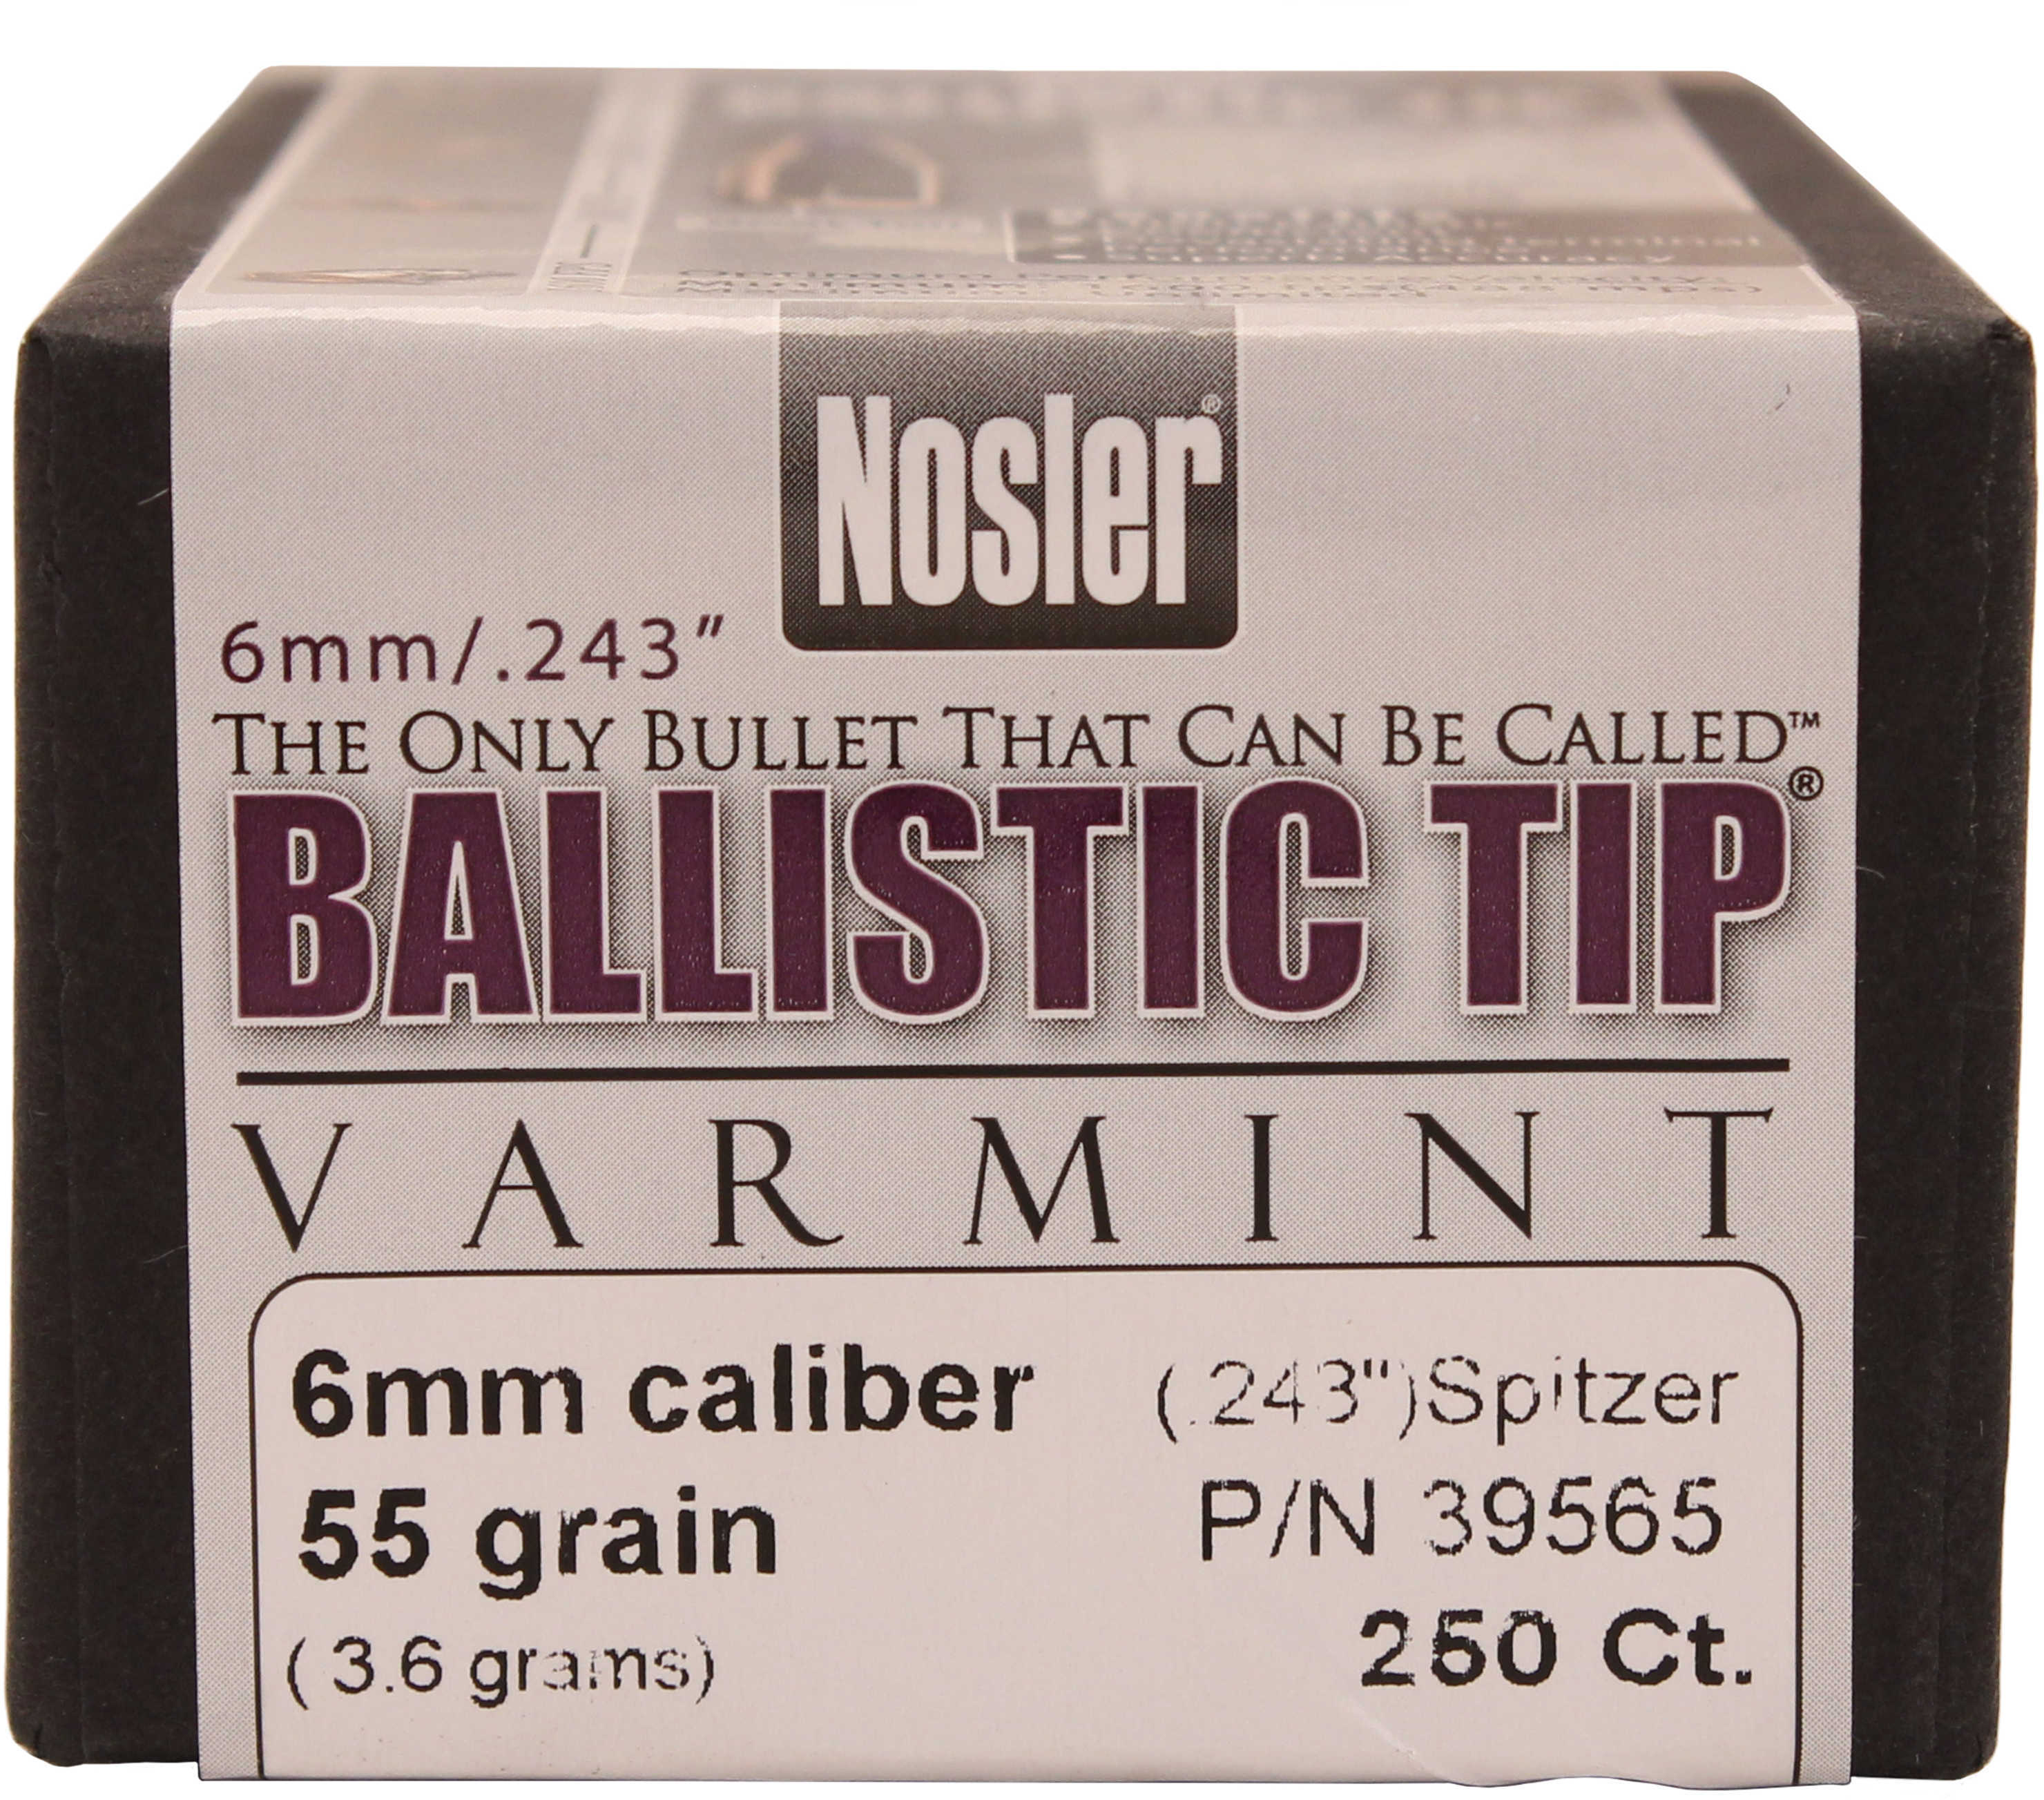 Nosler 6mm/243 Caliber 55 Grains Spitzer Ballistic Tip Varmint (Per 250) 39565